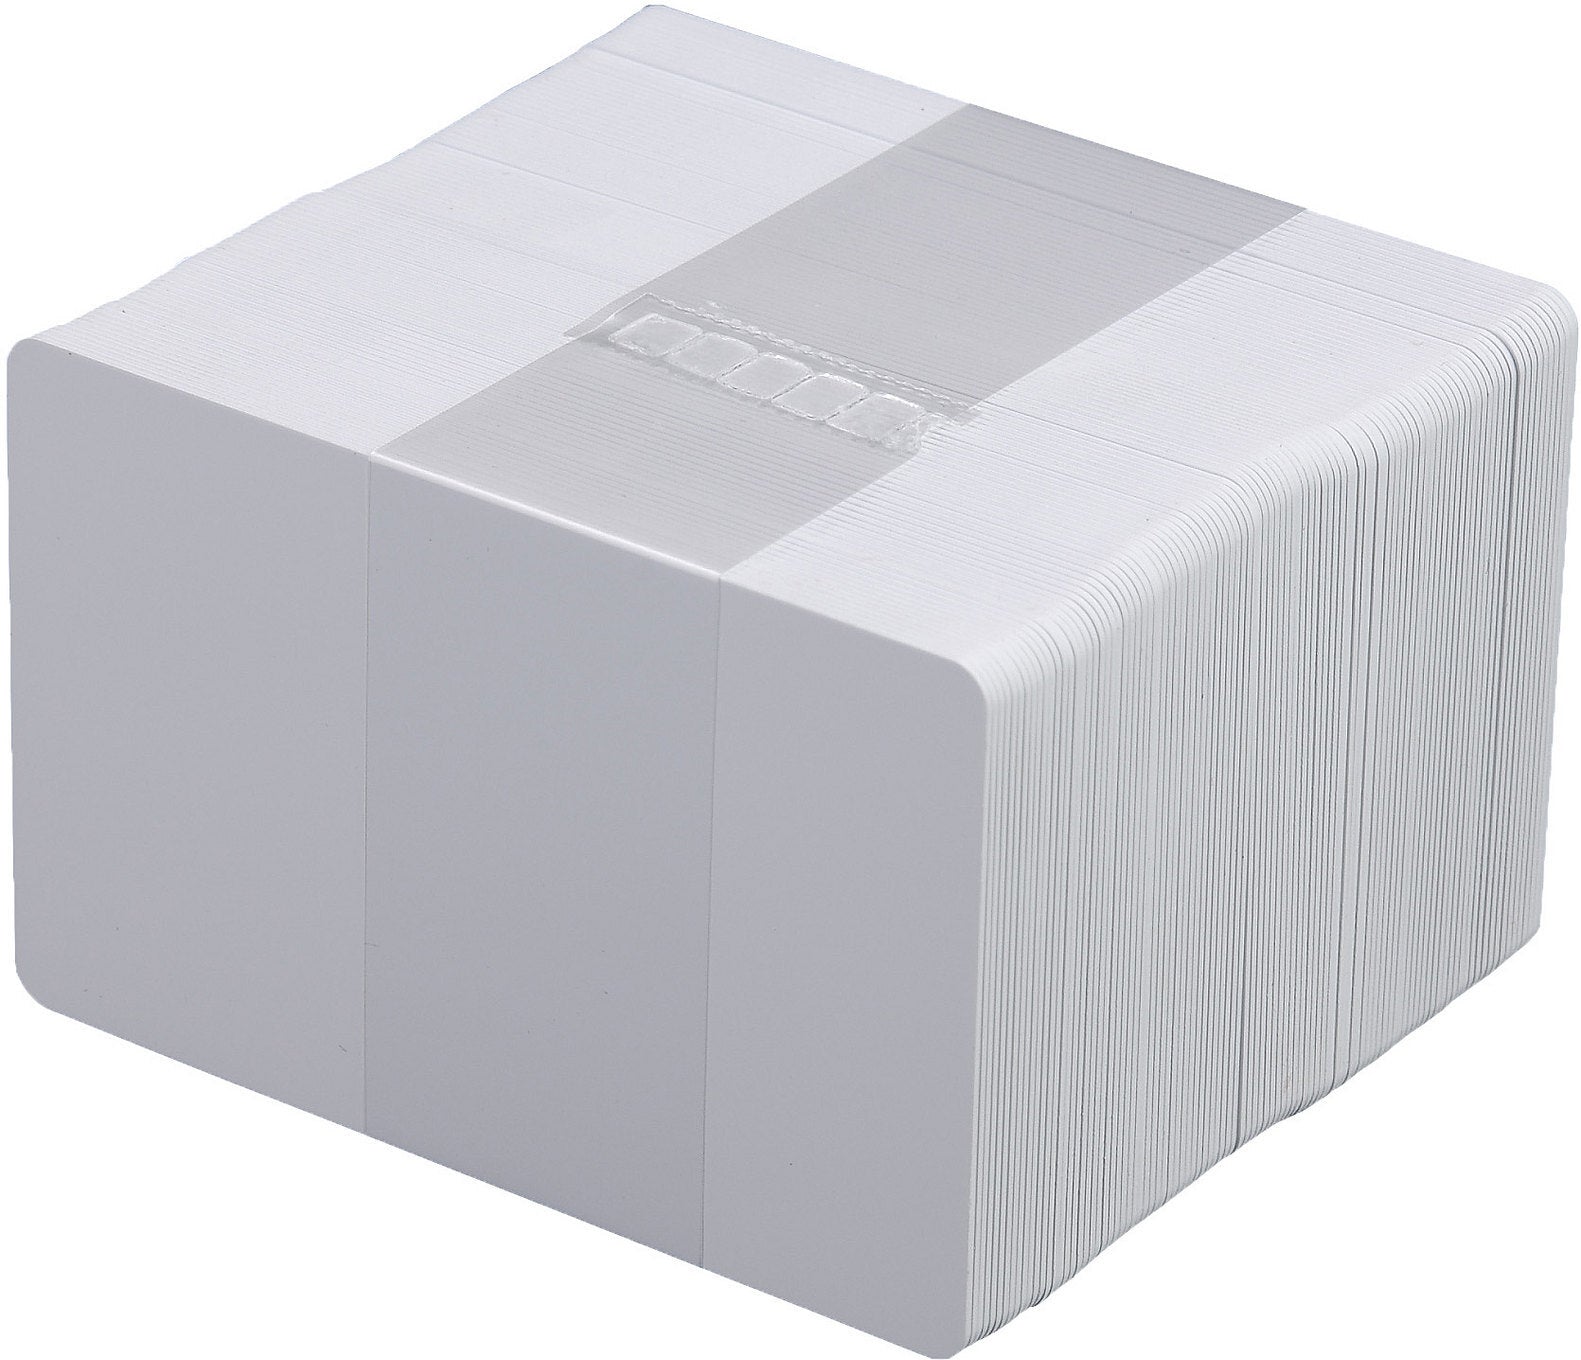 Blank White PVC Plastic ID Cards 760 micron | SPLIT PACKS - 25